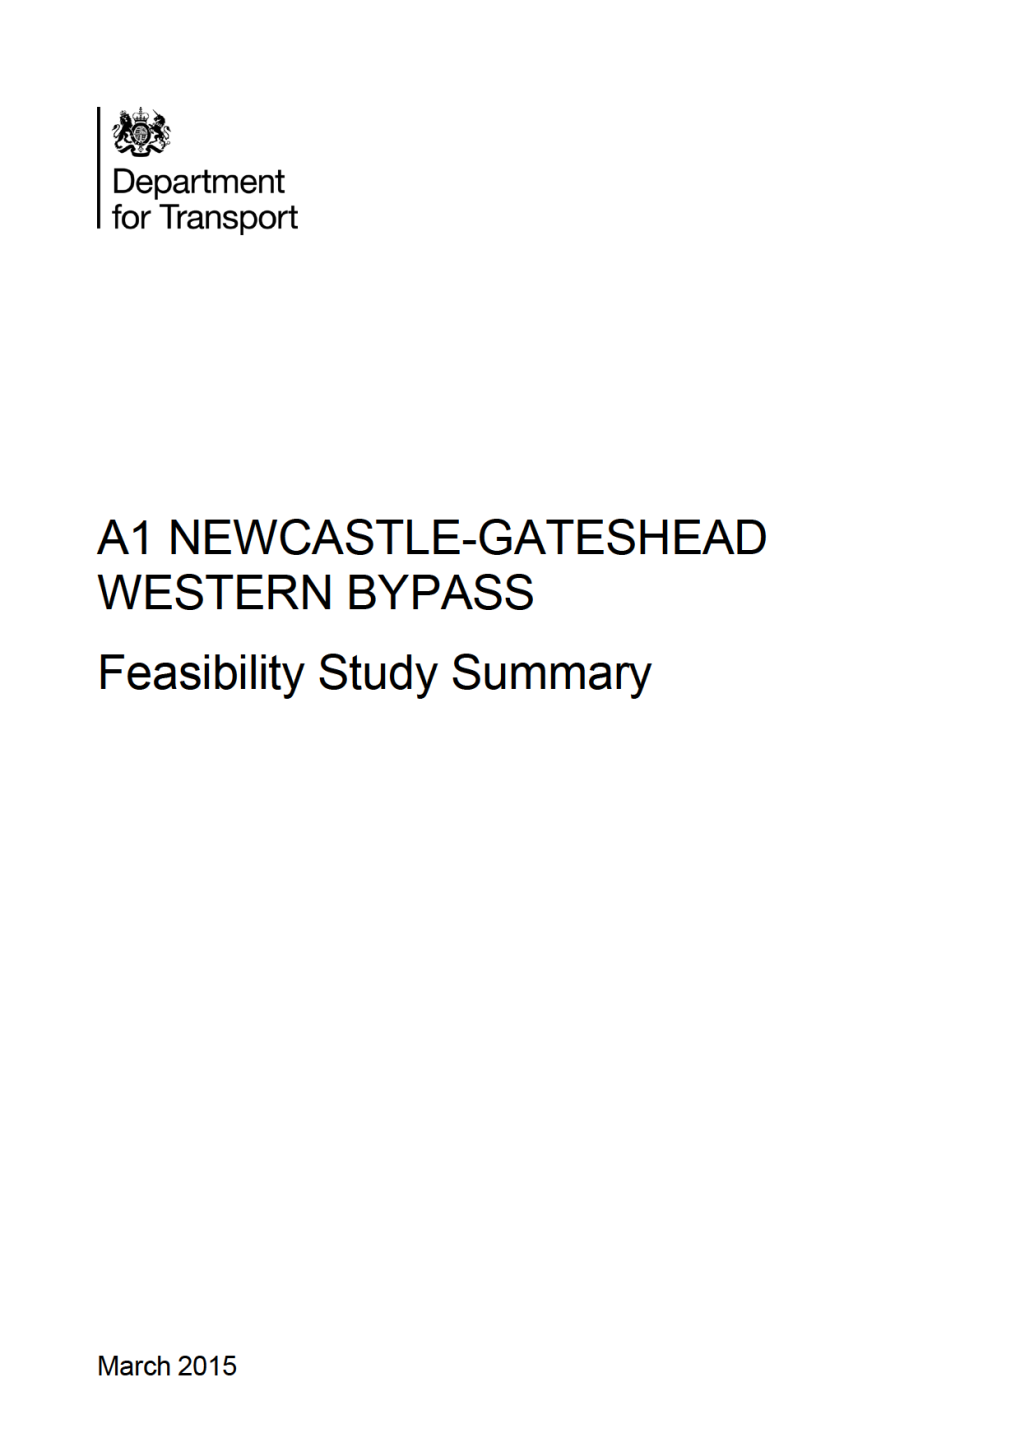 A1 Newcastle-Gateshead Western Bypass